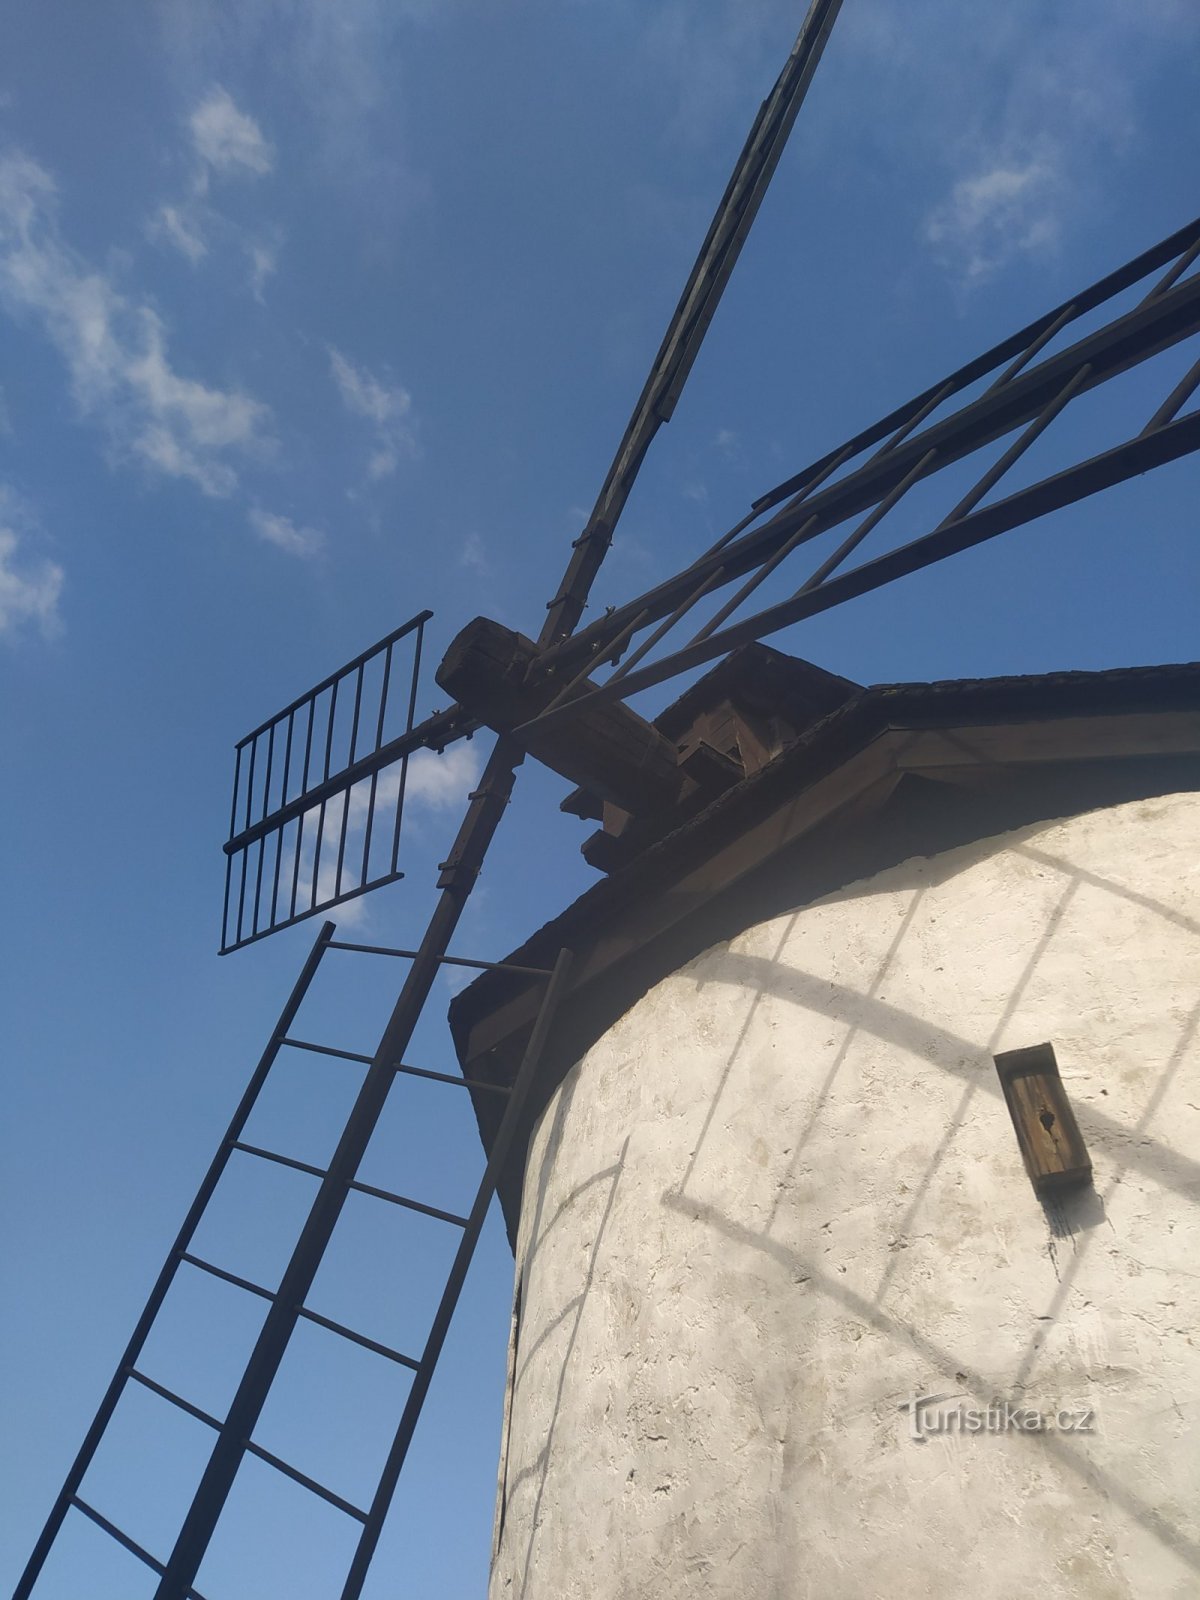 Štípa windmill